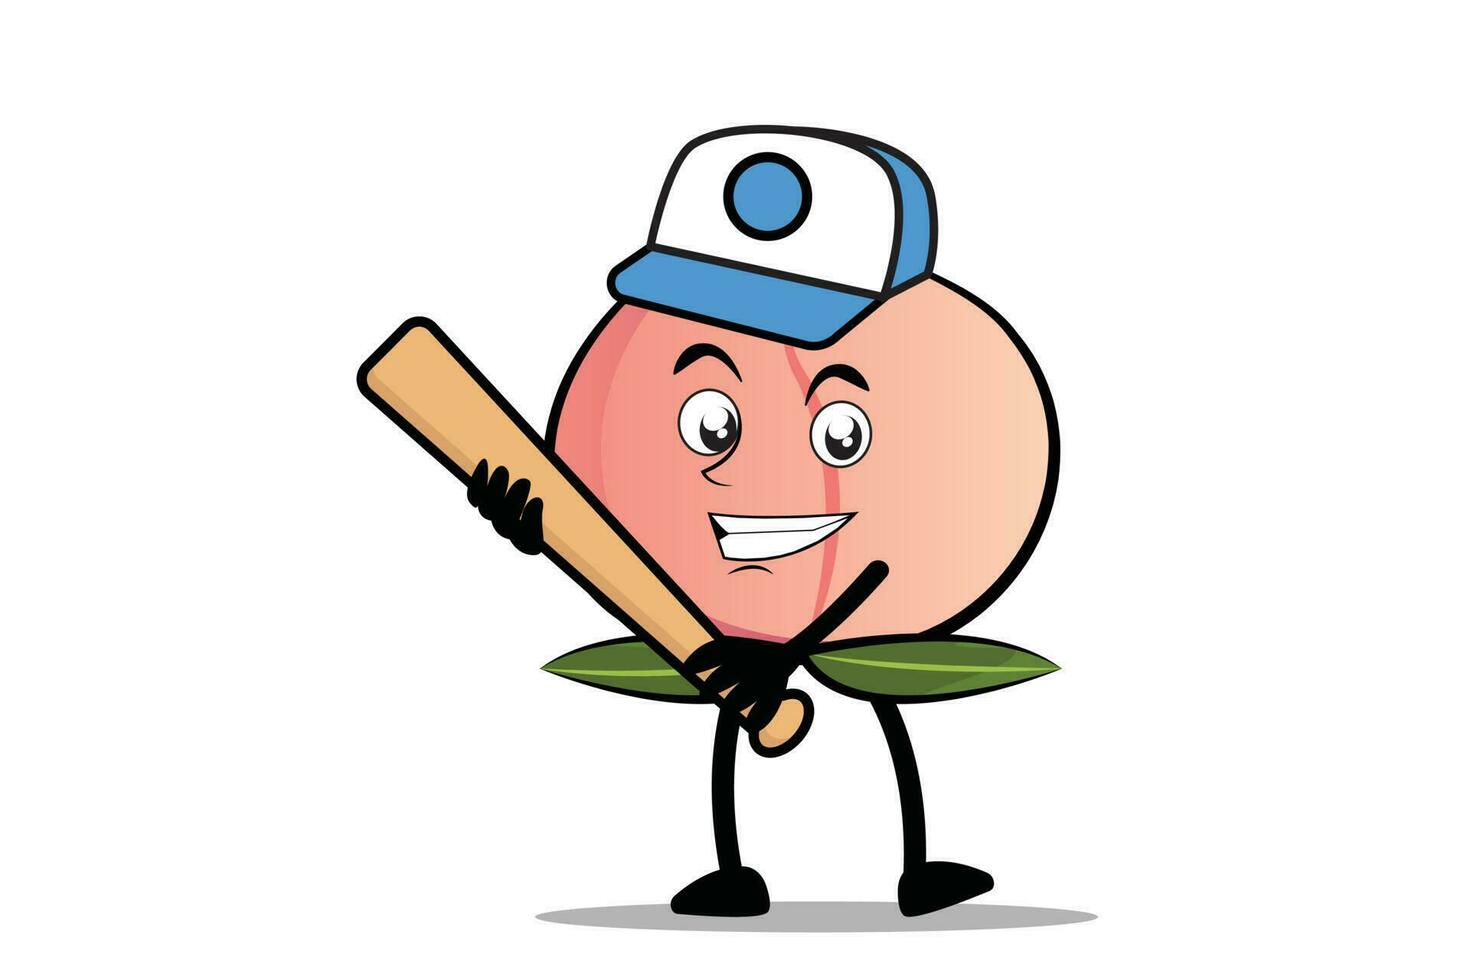 perzik tekenfilm mascotte of karakter Holding een basketbal knuppel net zo de mascotte van de basketbal team vector